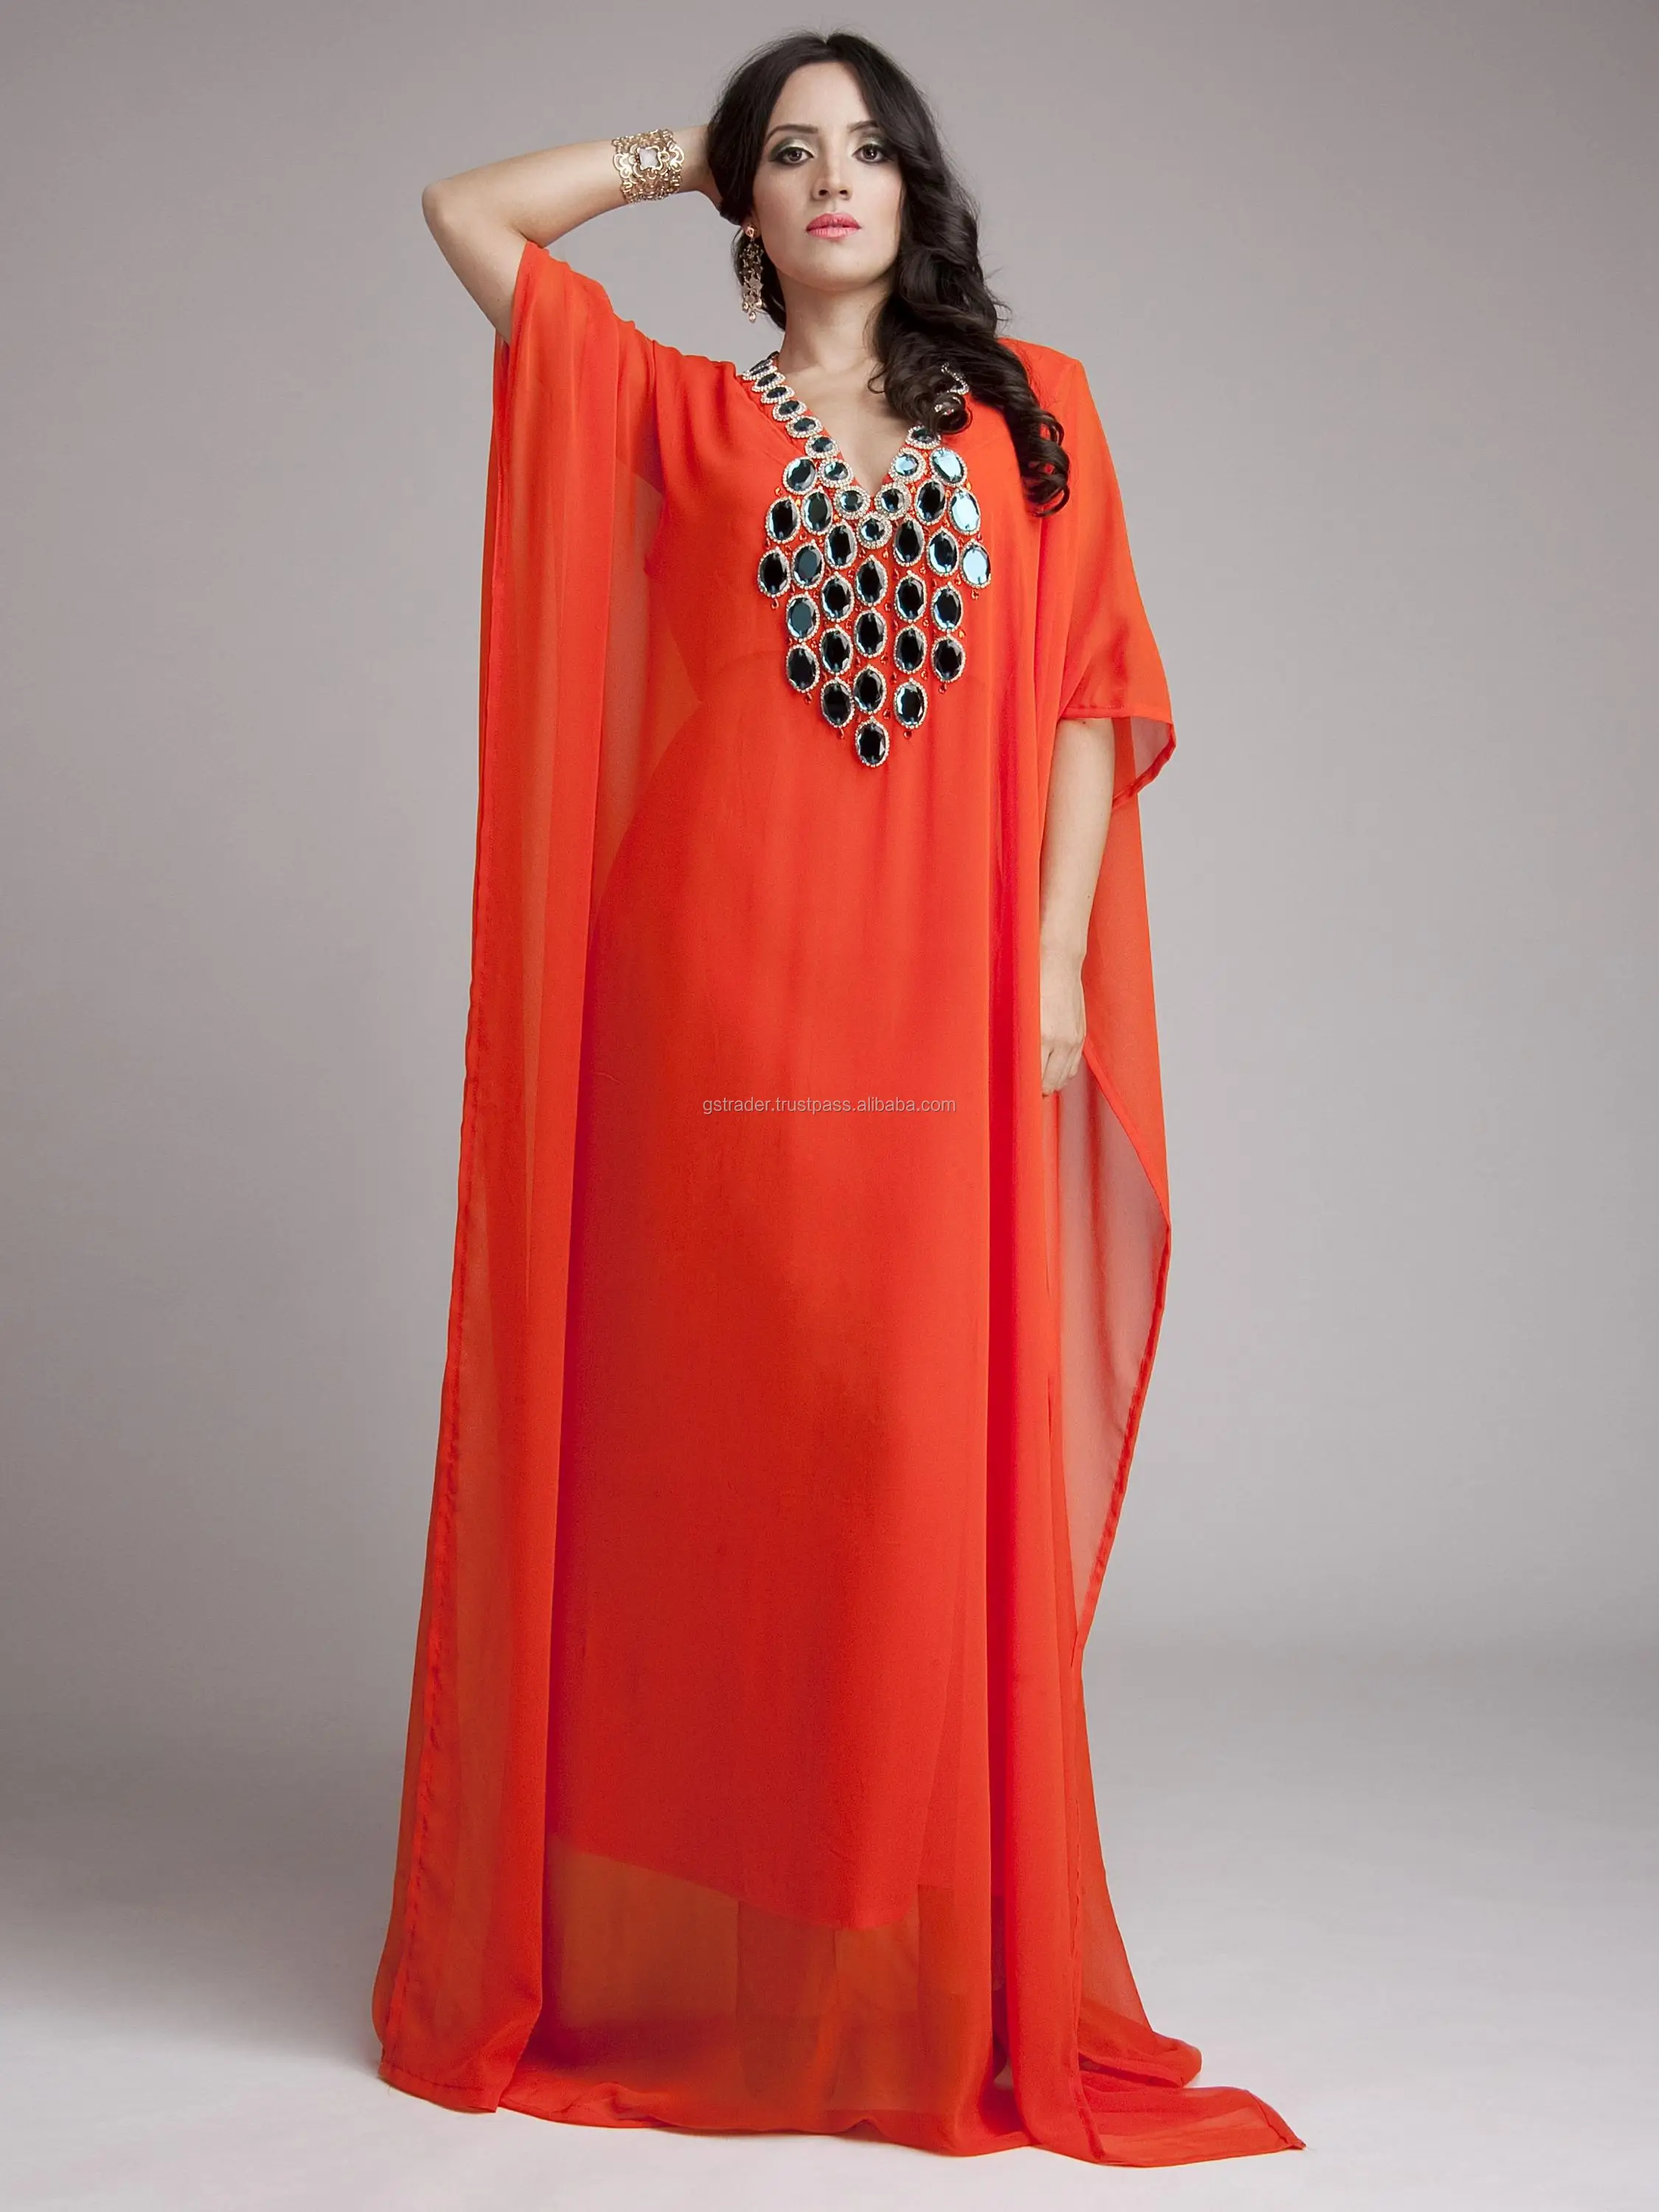 Nieuwe Designer Unieke Dames Mode Kaftan India 2015 Nieuwe Korte Mouw 2017 Abaya - Buy Kaftan,Abaya,Abaya 2017 Product on Alibaba.com